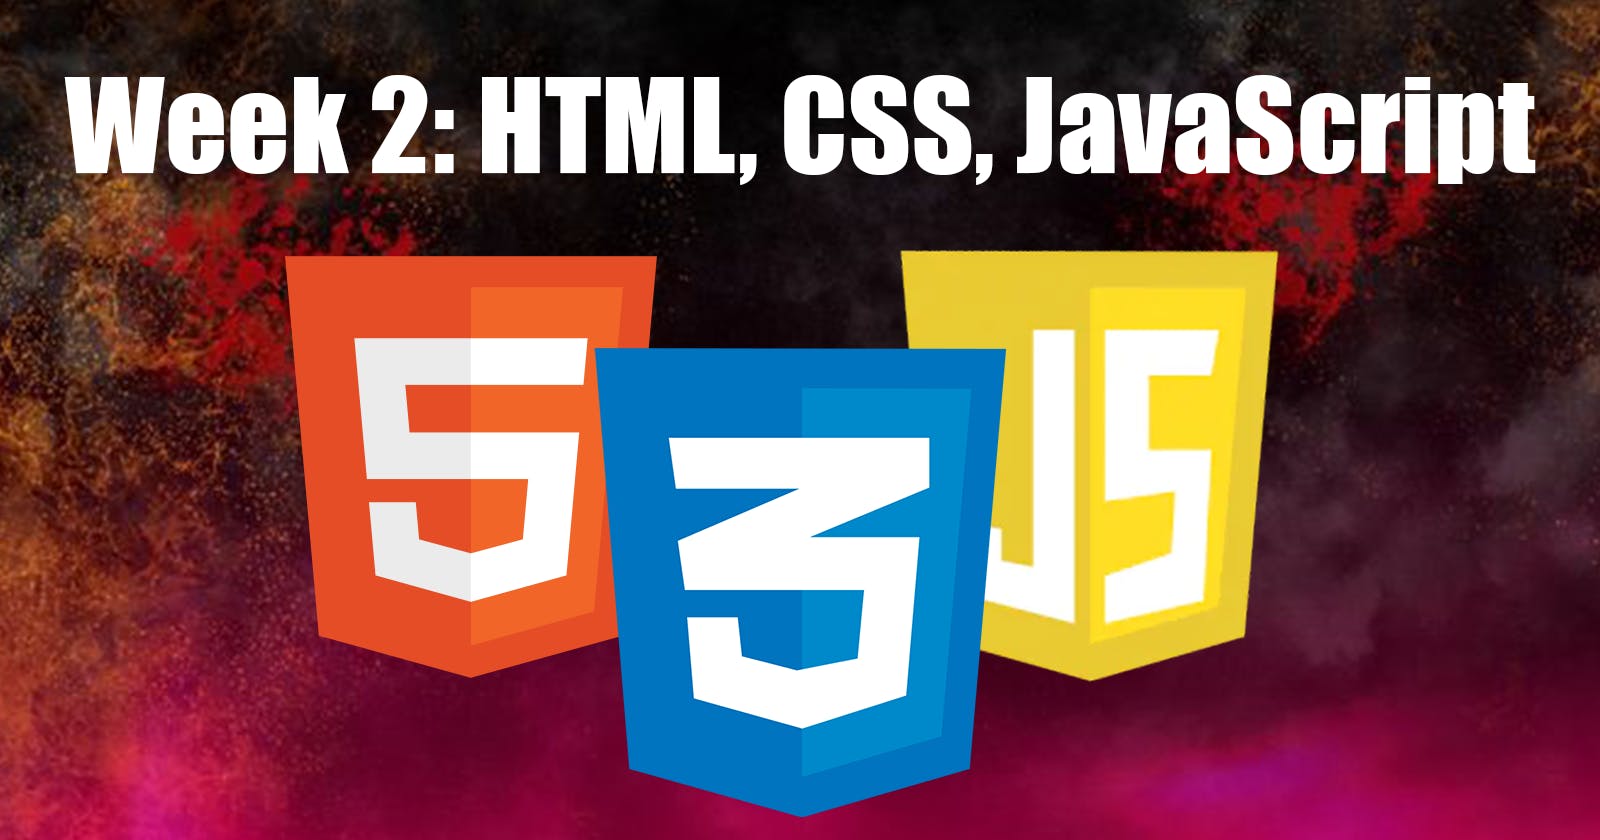 Journey to Fullstack - Week 2:HTML,CSS,JavaScript